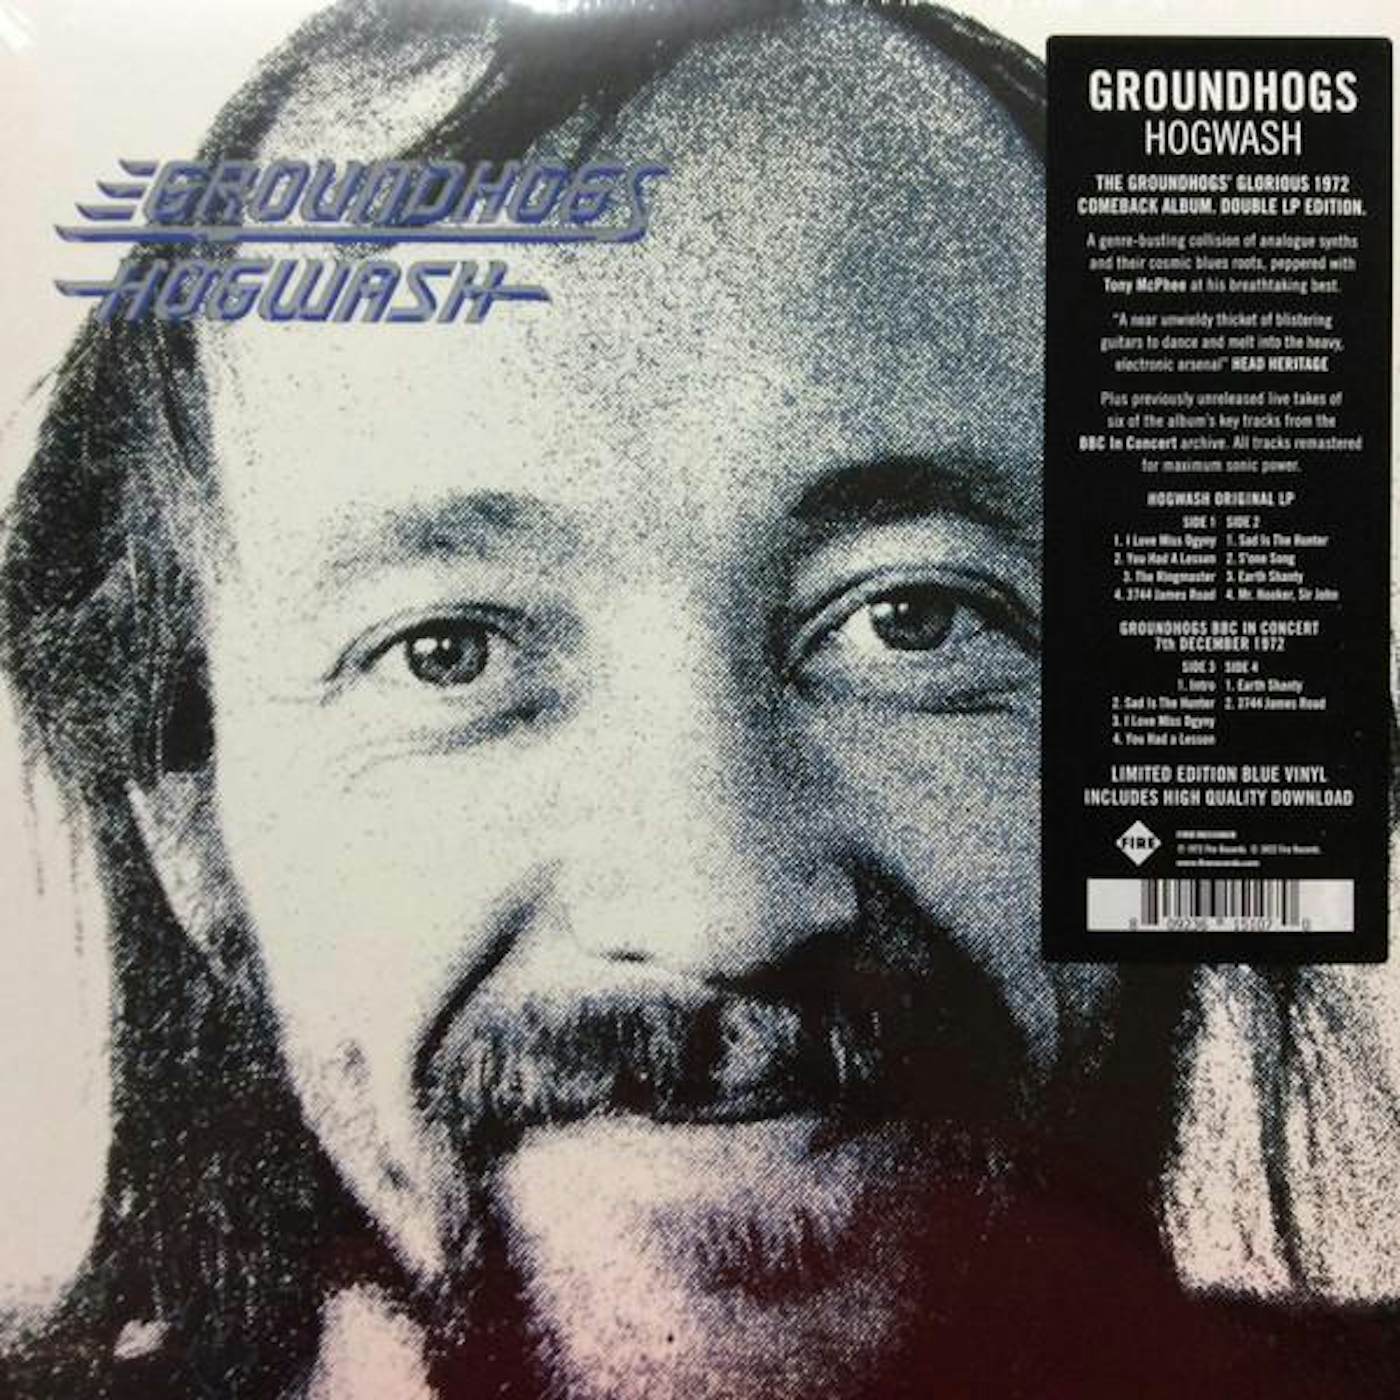 The Groundhogs HOGWASH (BLUE VINYL/2LP) Vinyl Record